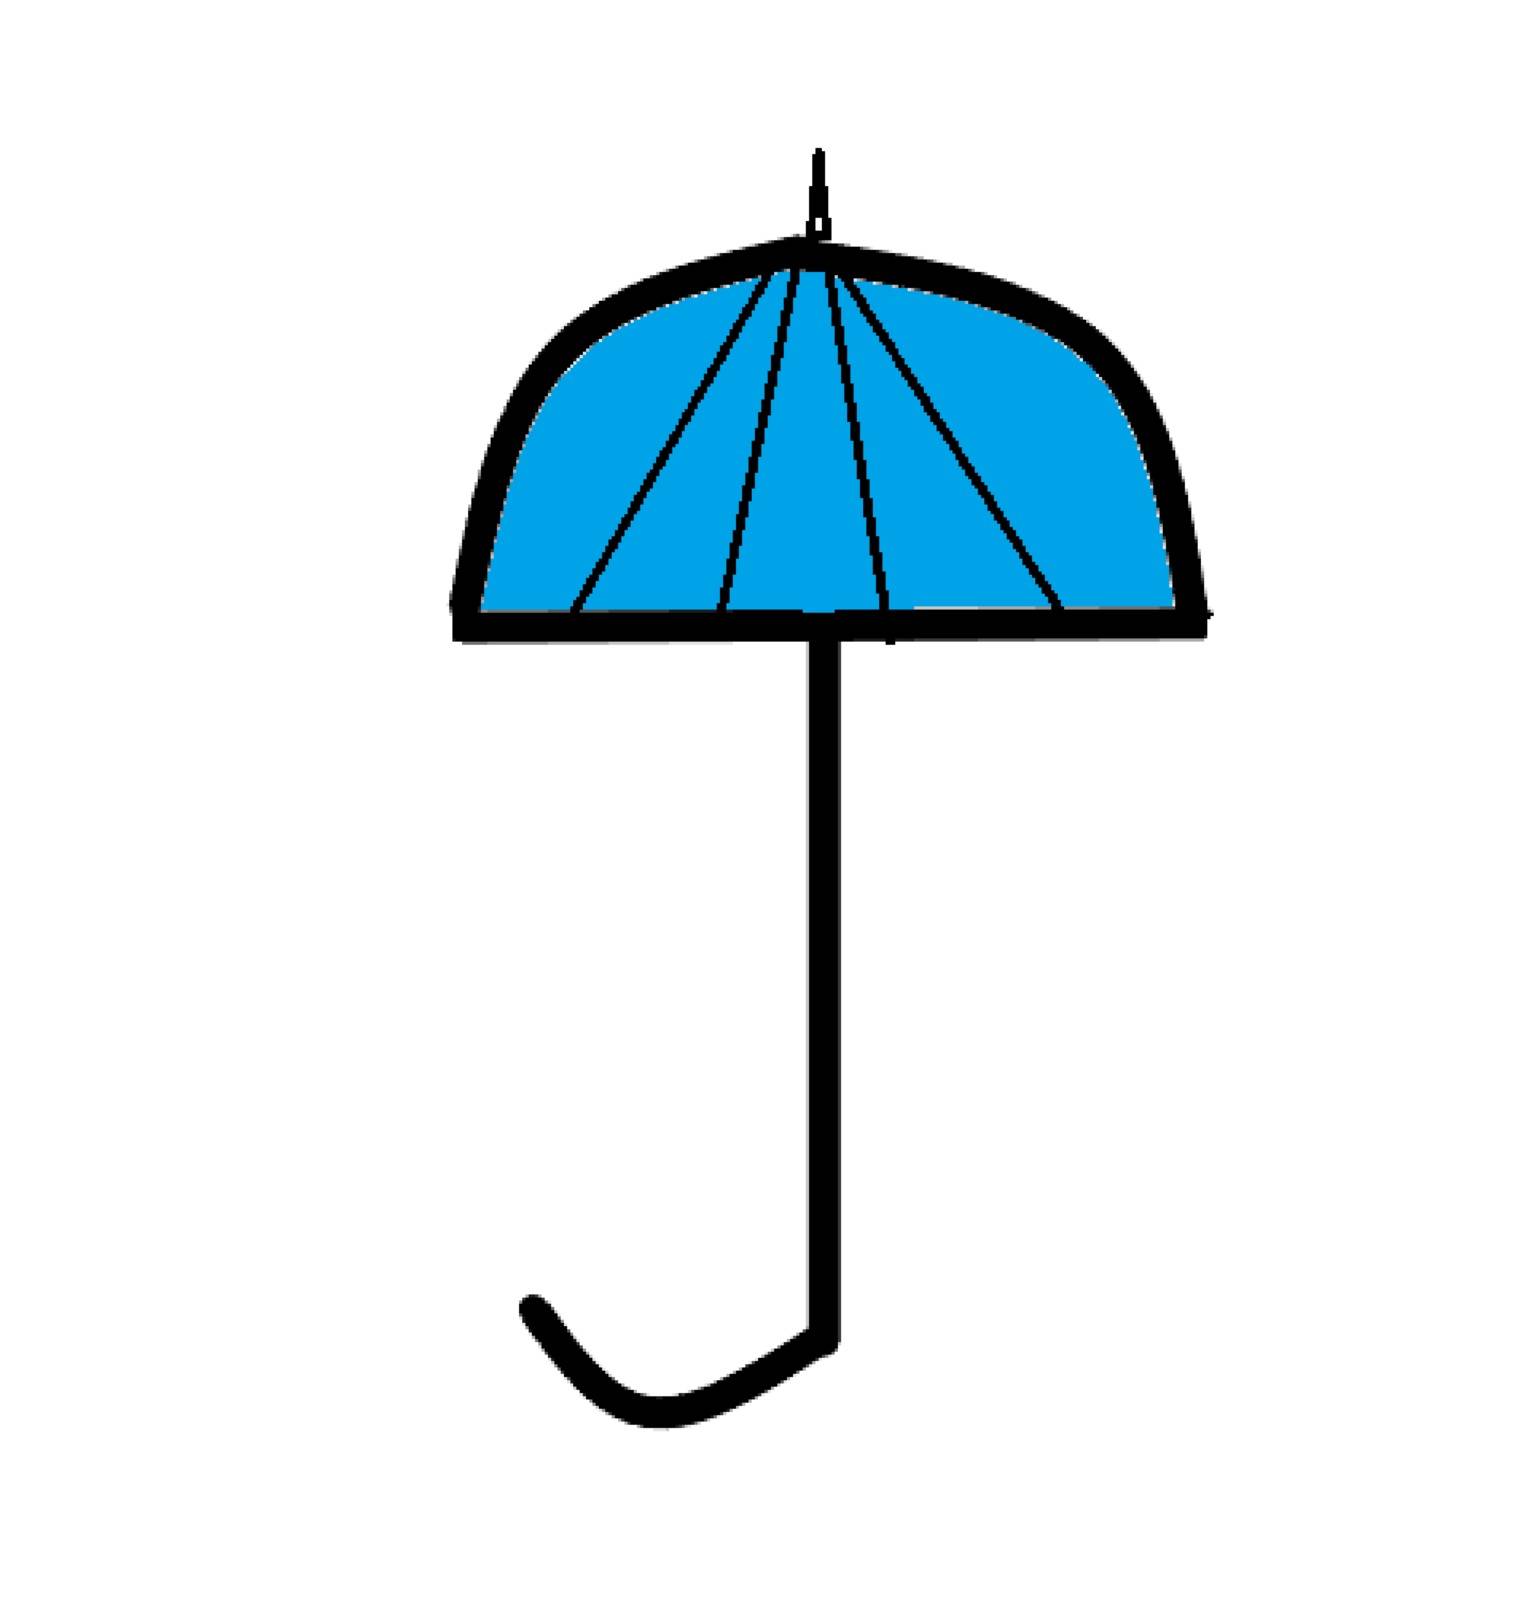 Umbrella by jasonlee3071